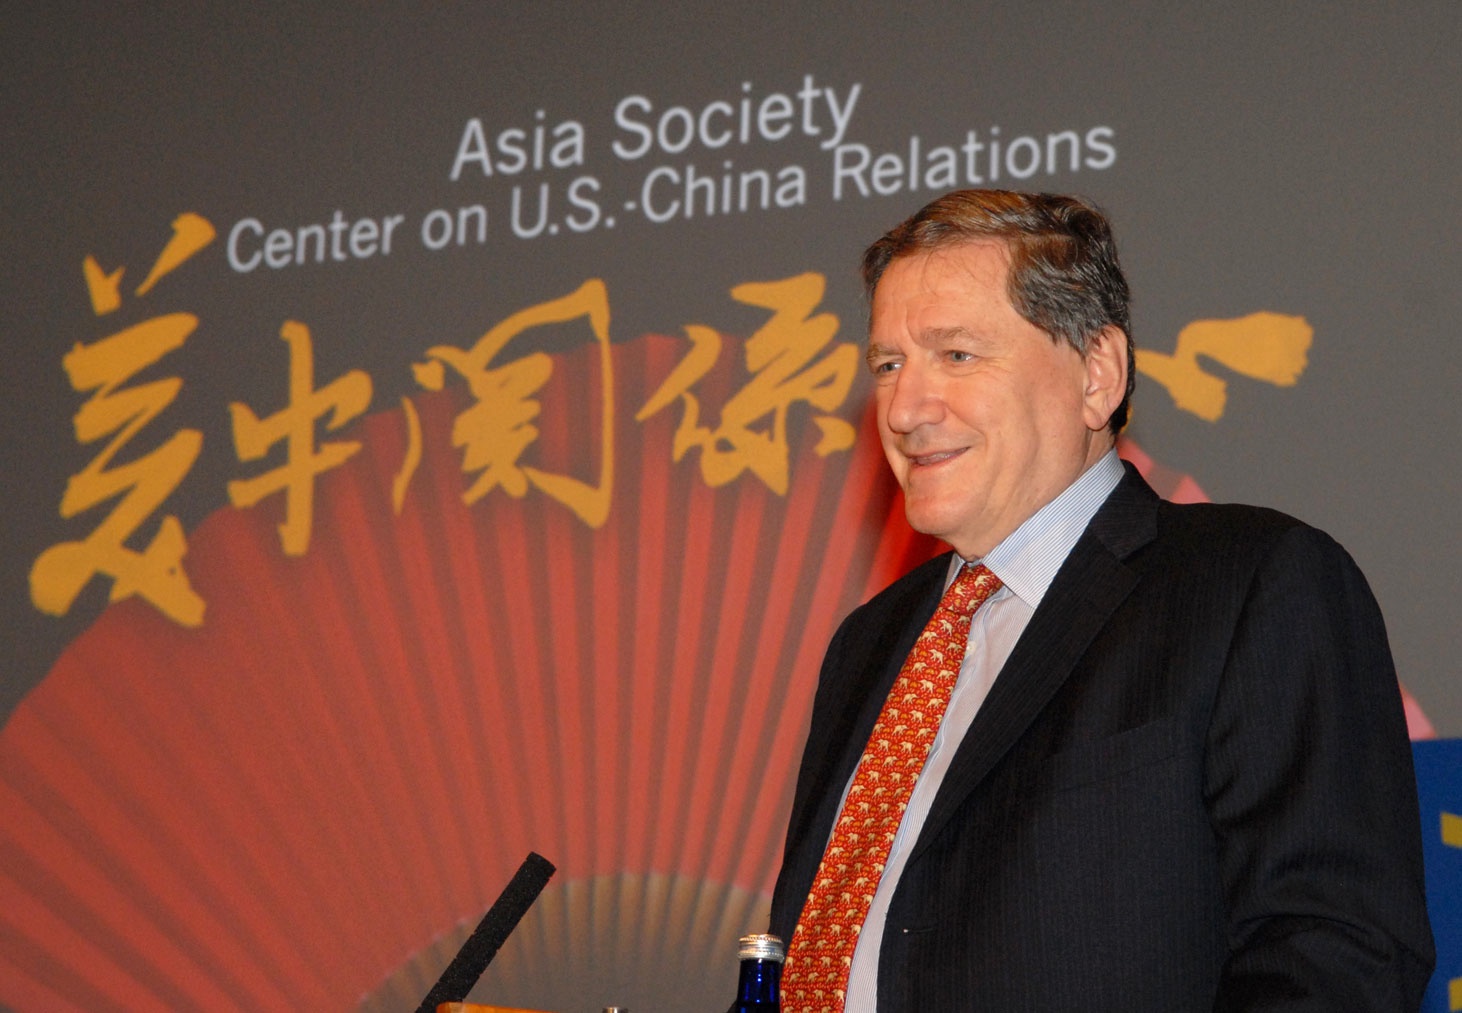 Richard Holbrooke (photo credit: Asia Society/flickr)